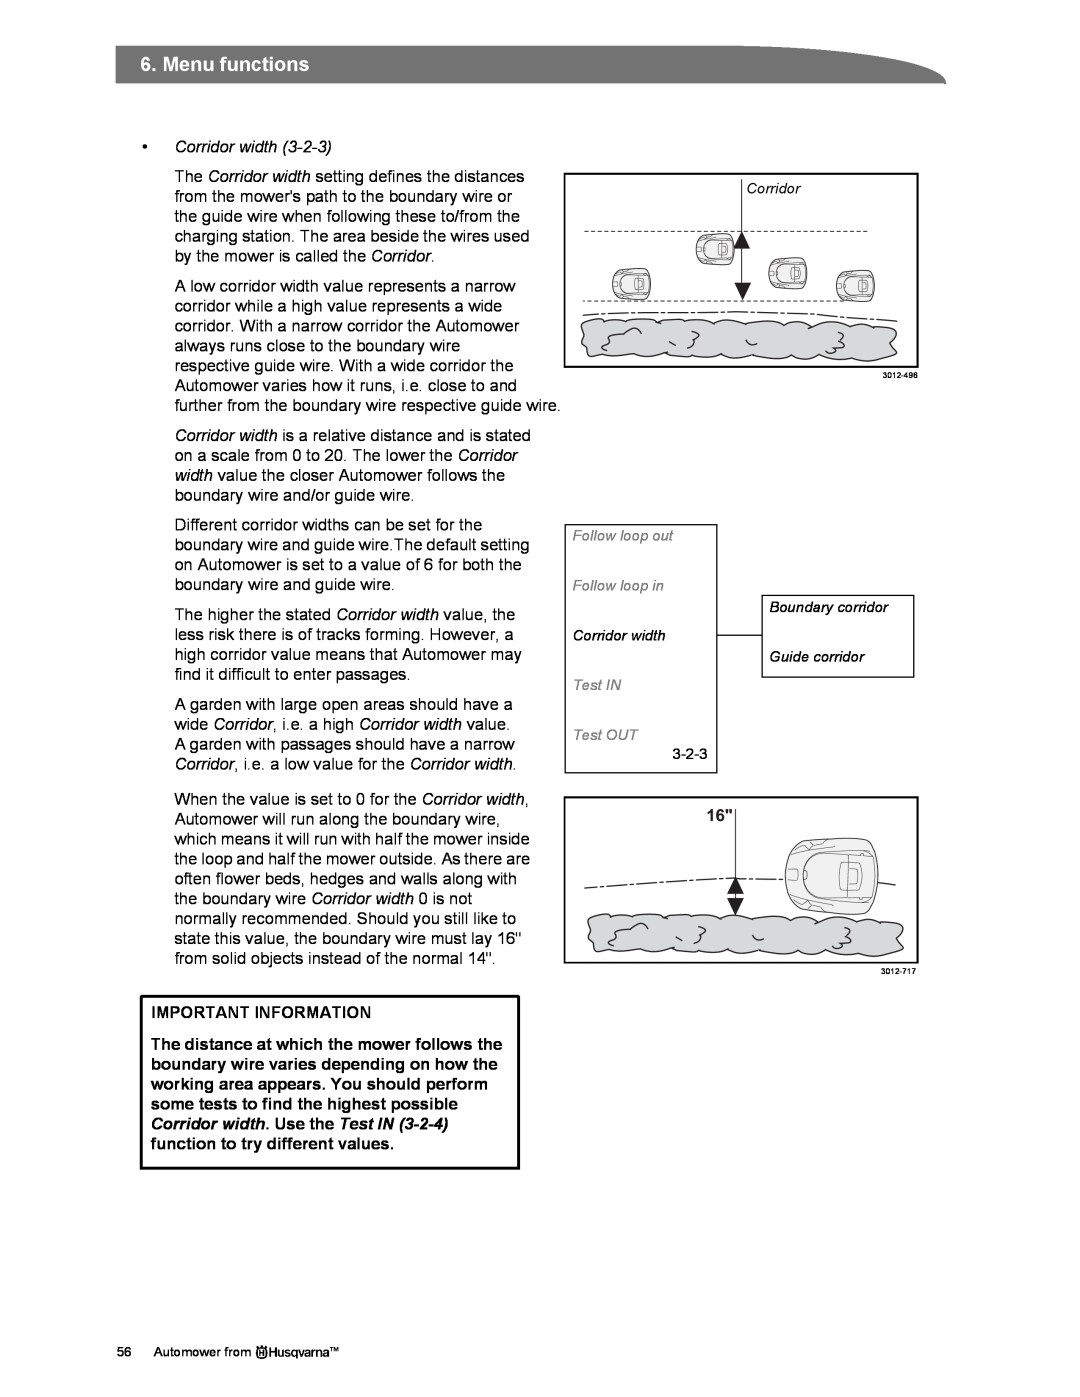 Husqvarna Automower manual Menu functions, •Corridor width, Important Information, Boundary corridor Guide corridor 